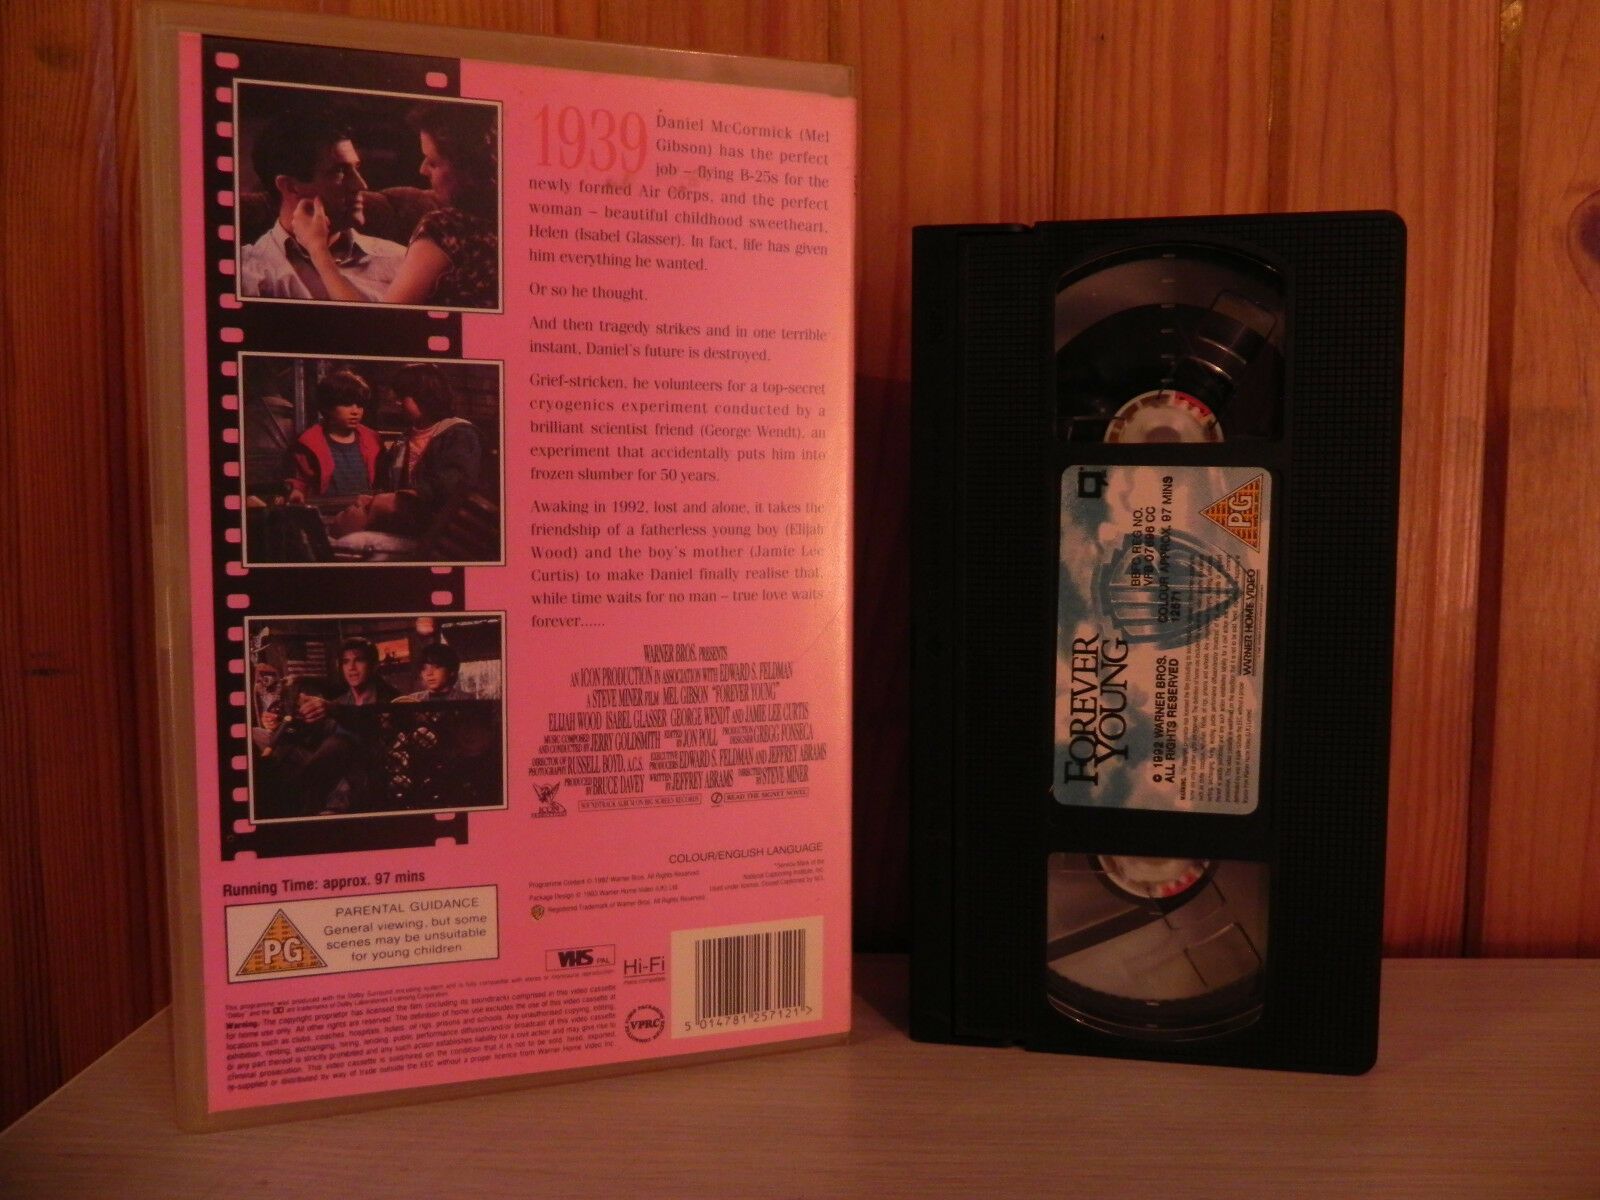 FOREVER YOUNG - Mel Gibson - Cryo Sleep Drama - Big Box - Ex-Rental Video - VHS-